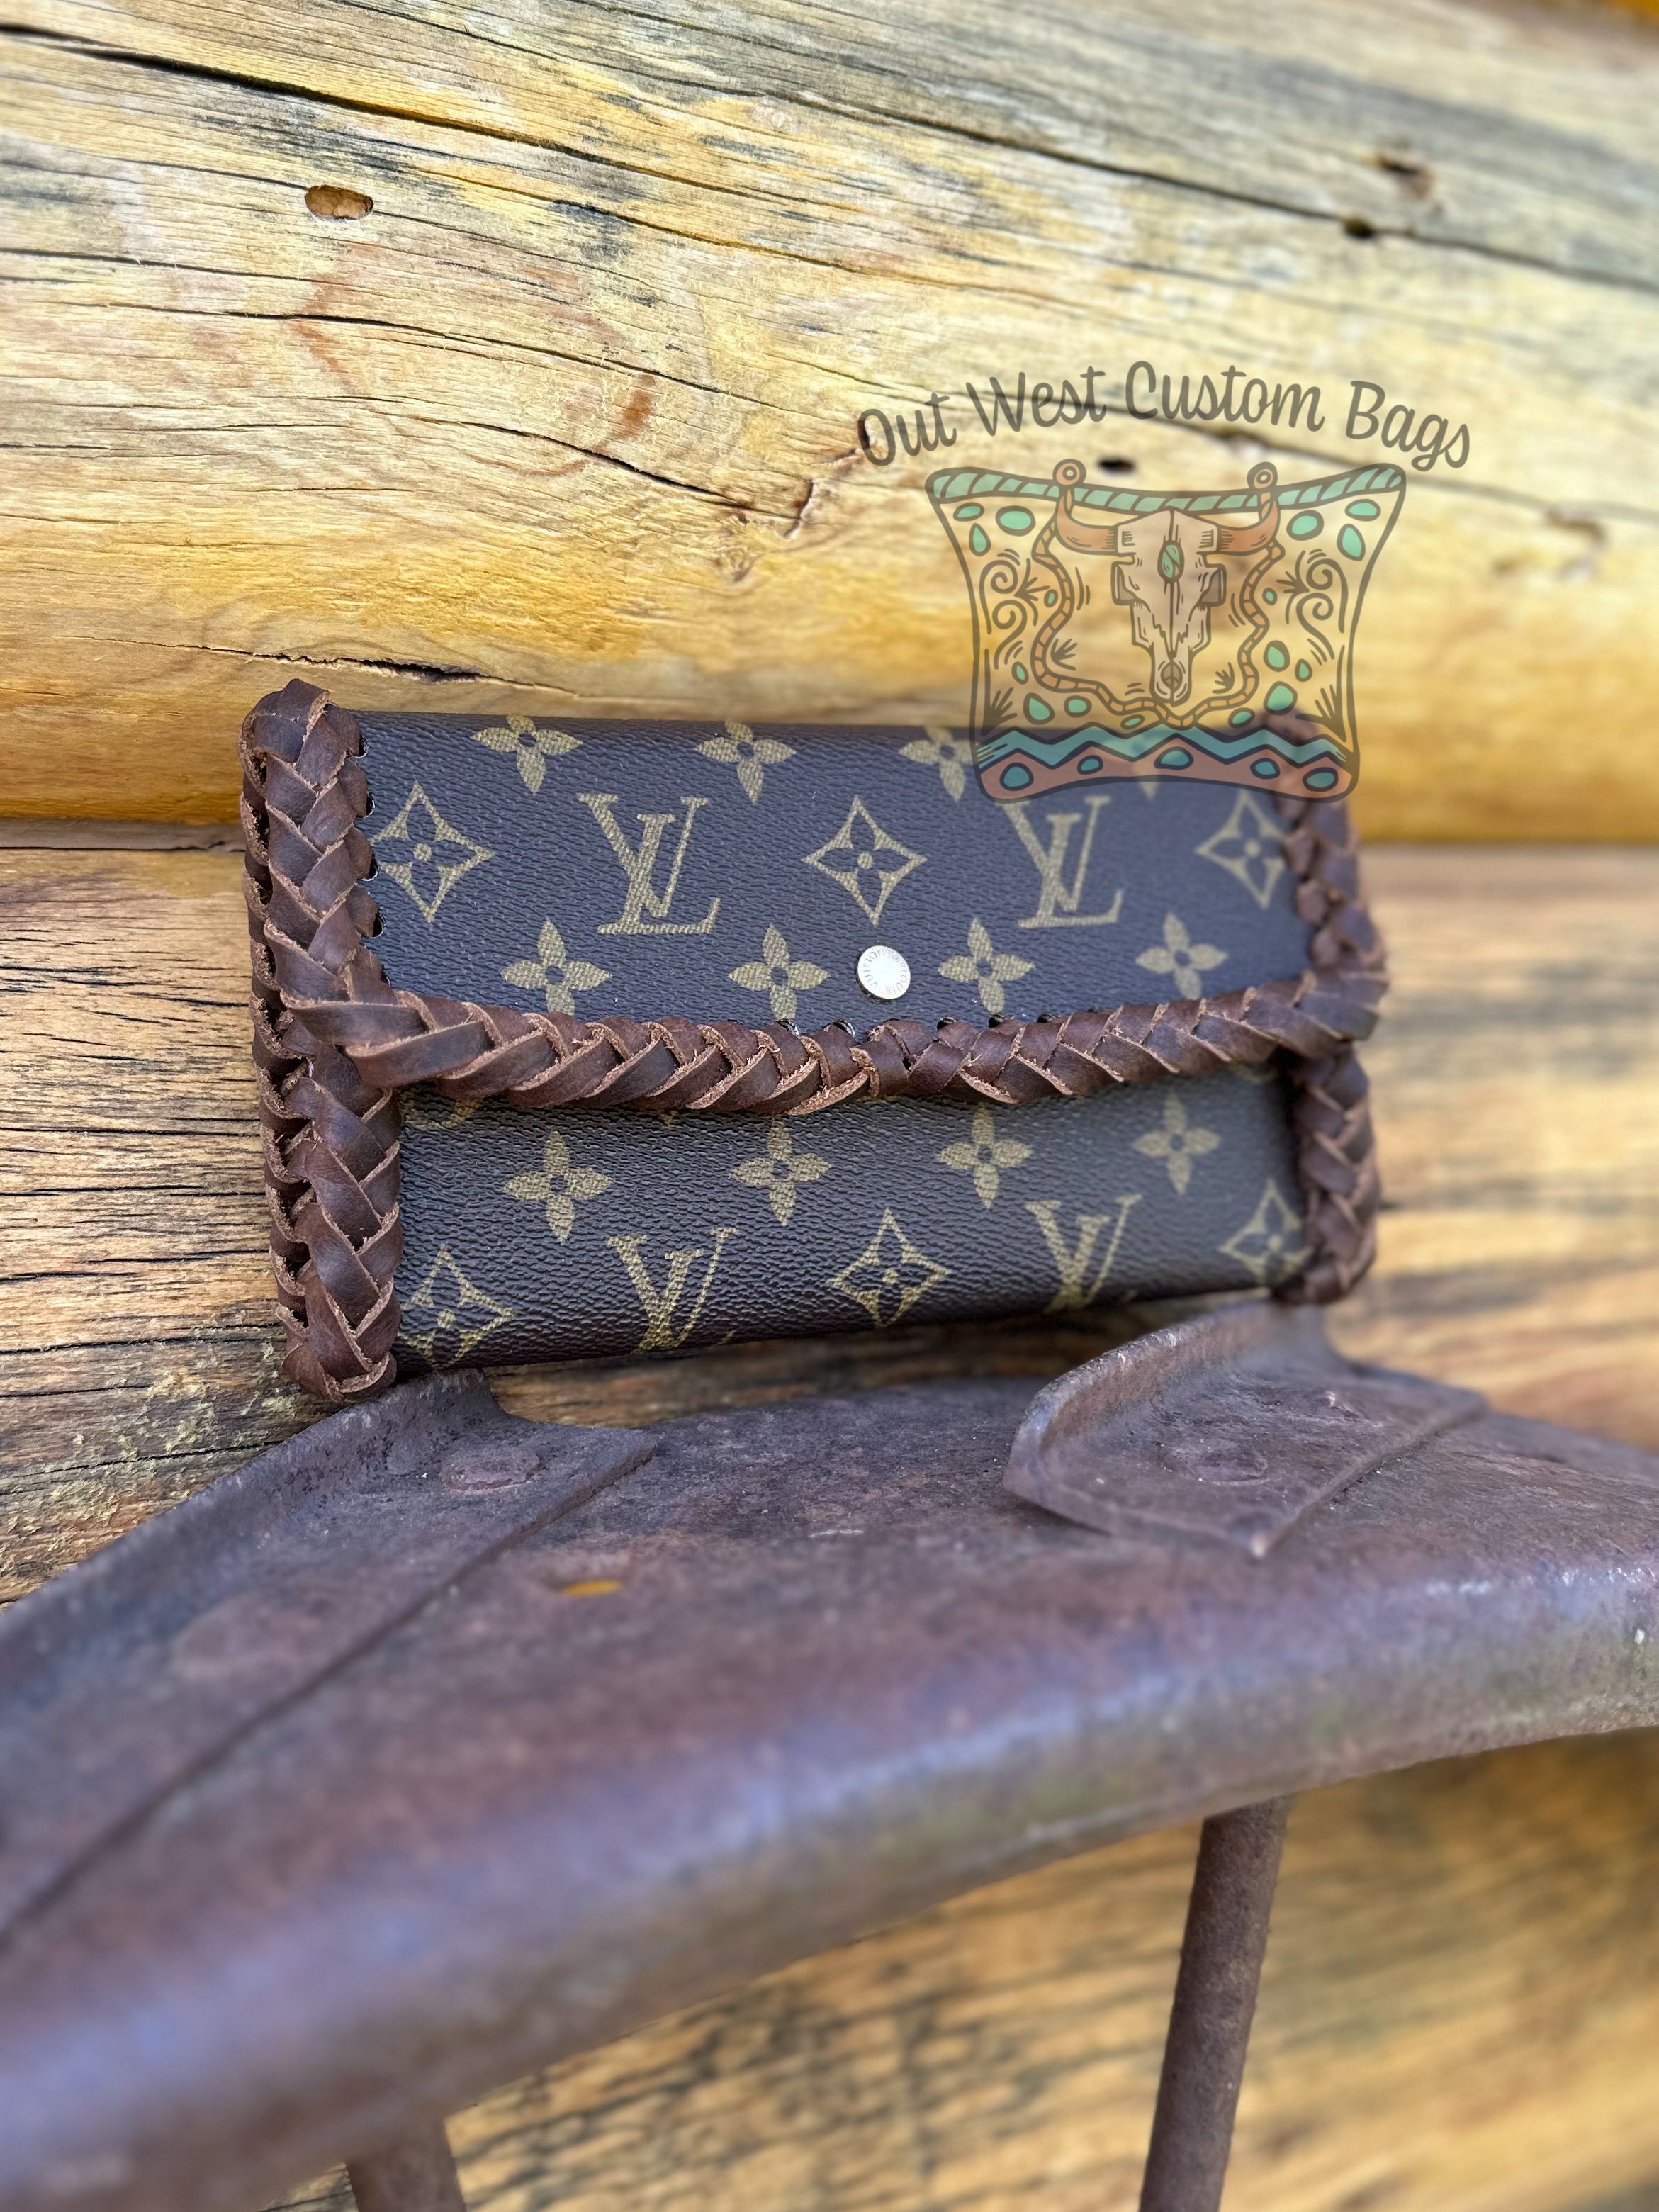 Authentic Louis Vuitton wallet, genuine leather